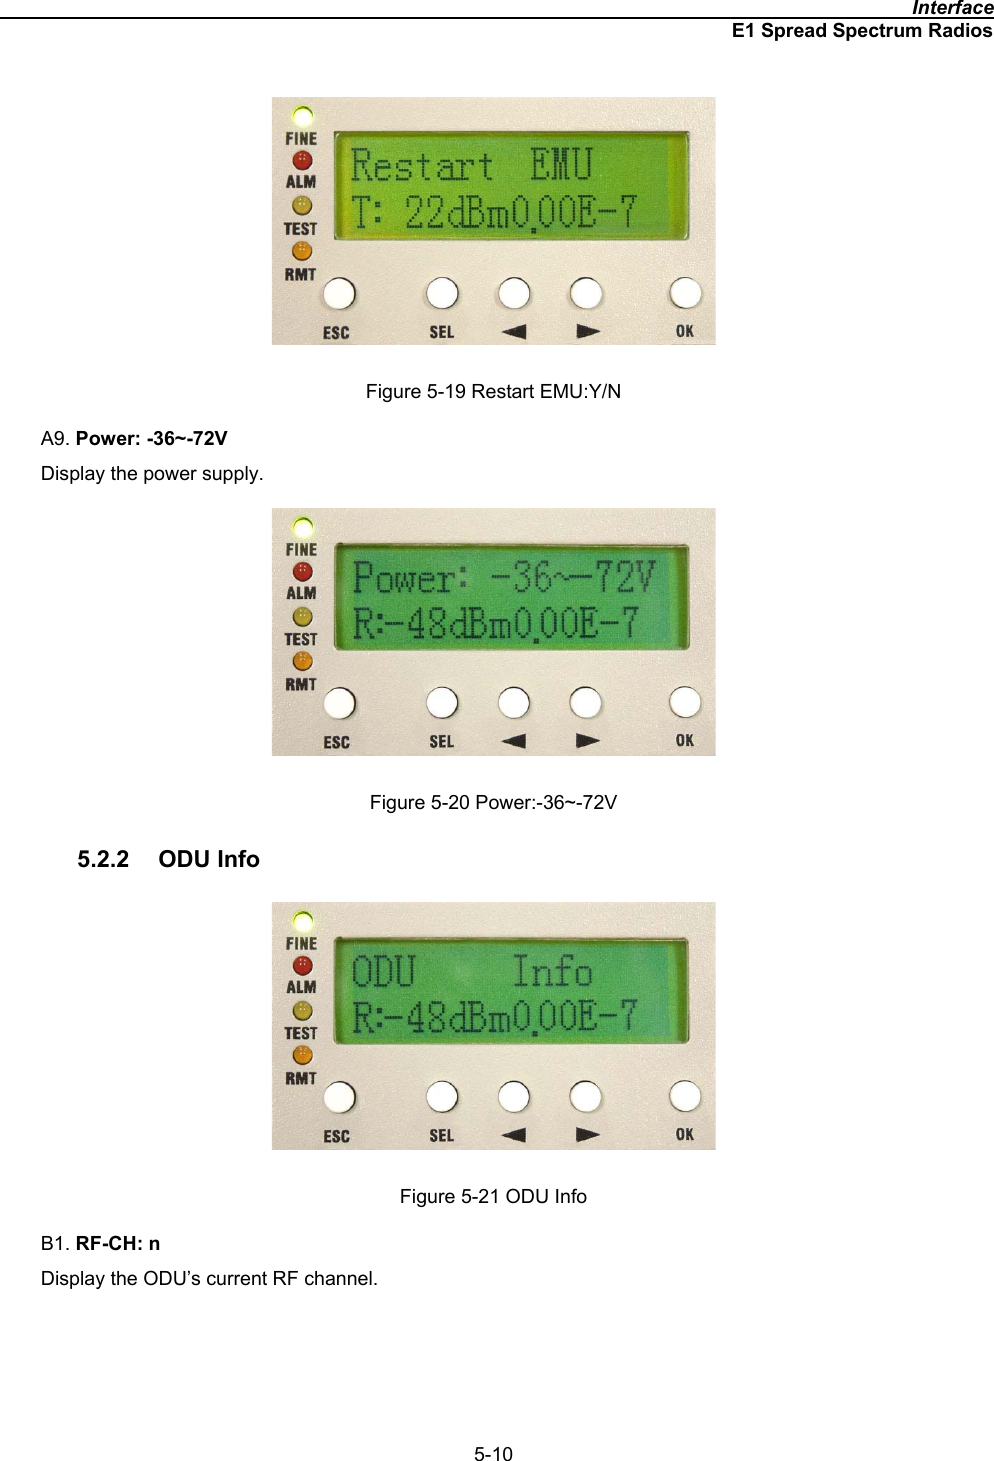                                                                                              InterfaceE1 Spread Spectrum Radios5-10Figure 5-19 Restart EMU:Y/N A9. Power: -36~-72VDisplay the power supply. Figure 5-20 Power:-36~-72V 5.2.2 ODU Info Figure 5-21 ODU Info B1. RF-CH: nDisplay the ODU’s current RF channel.   